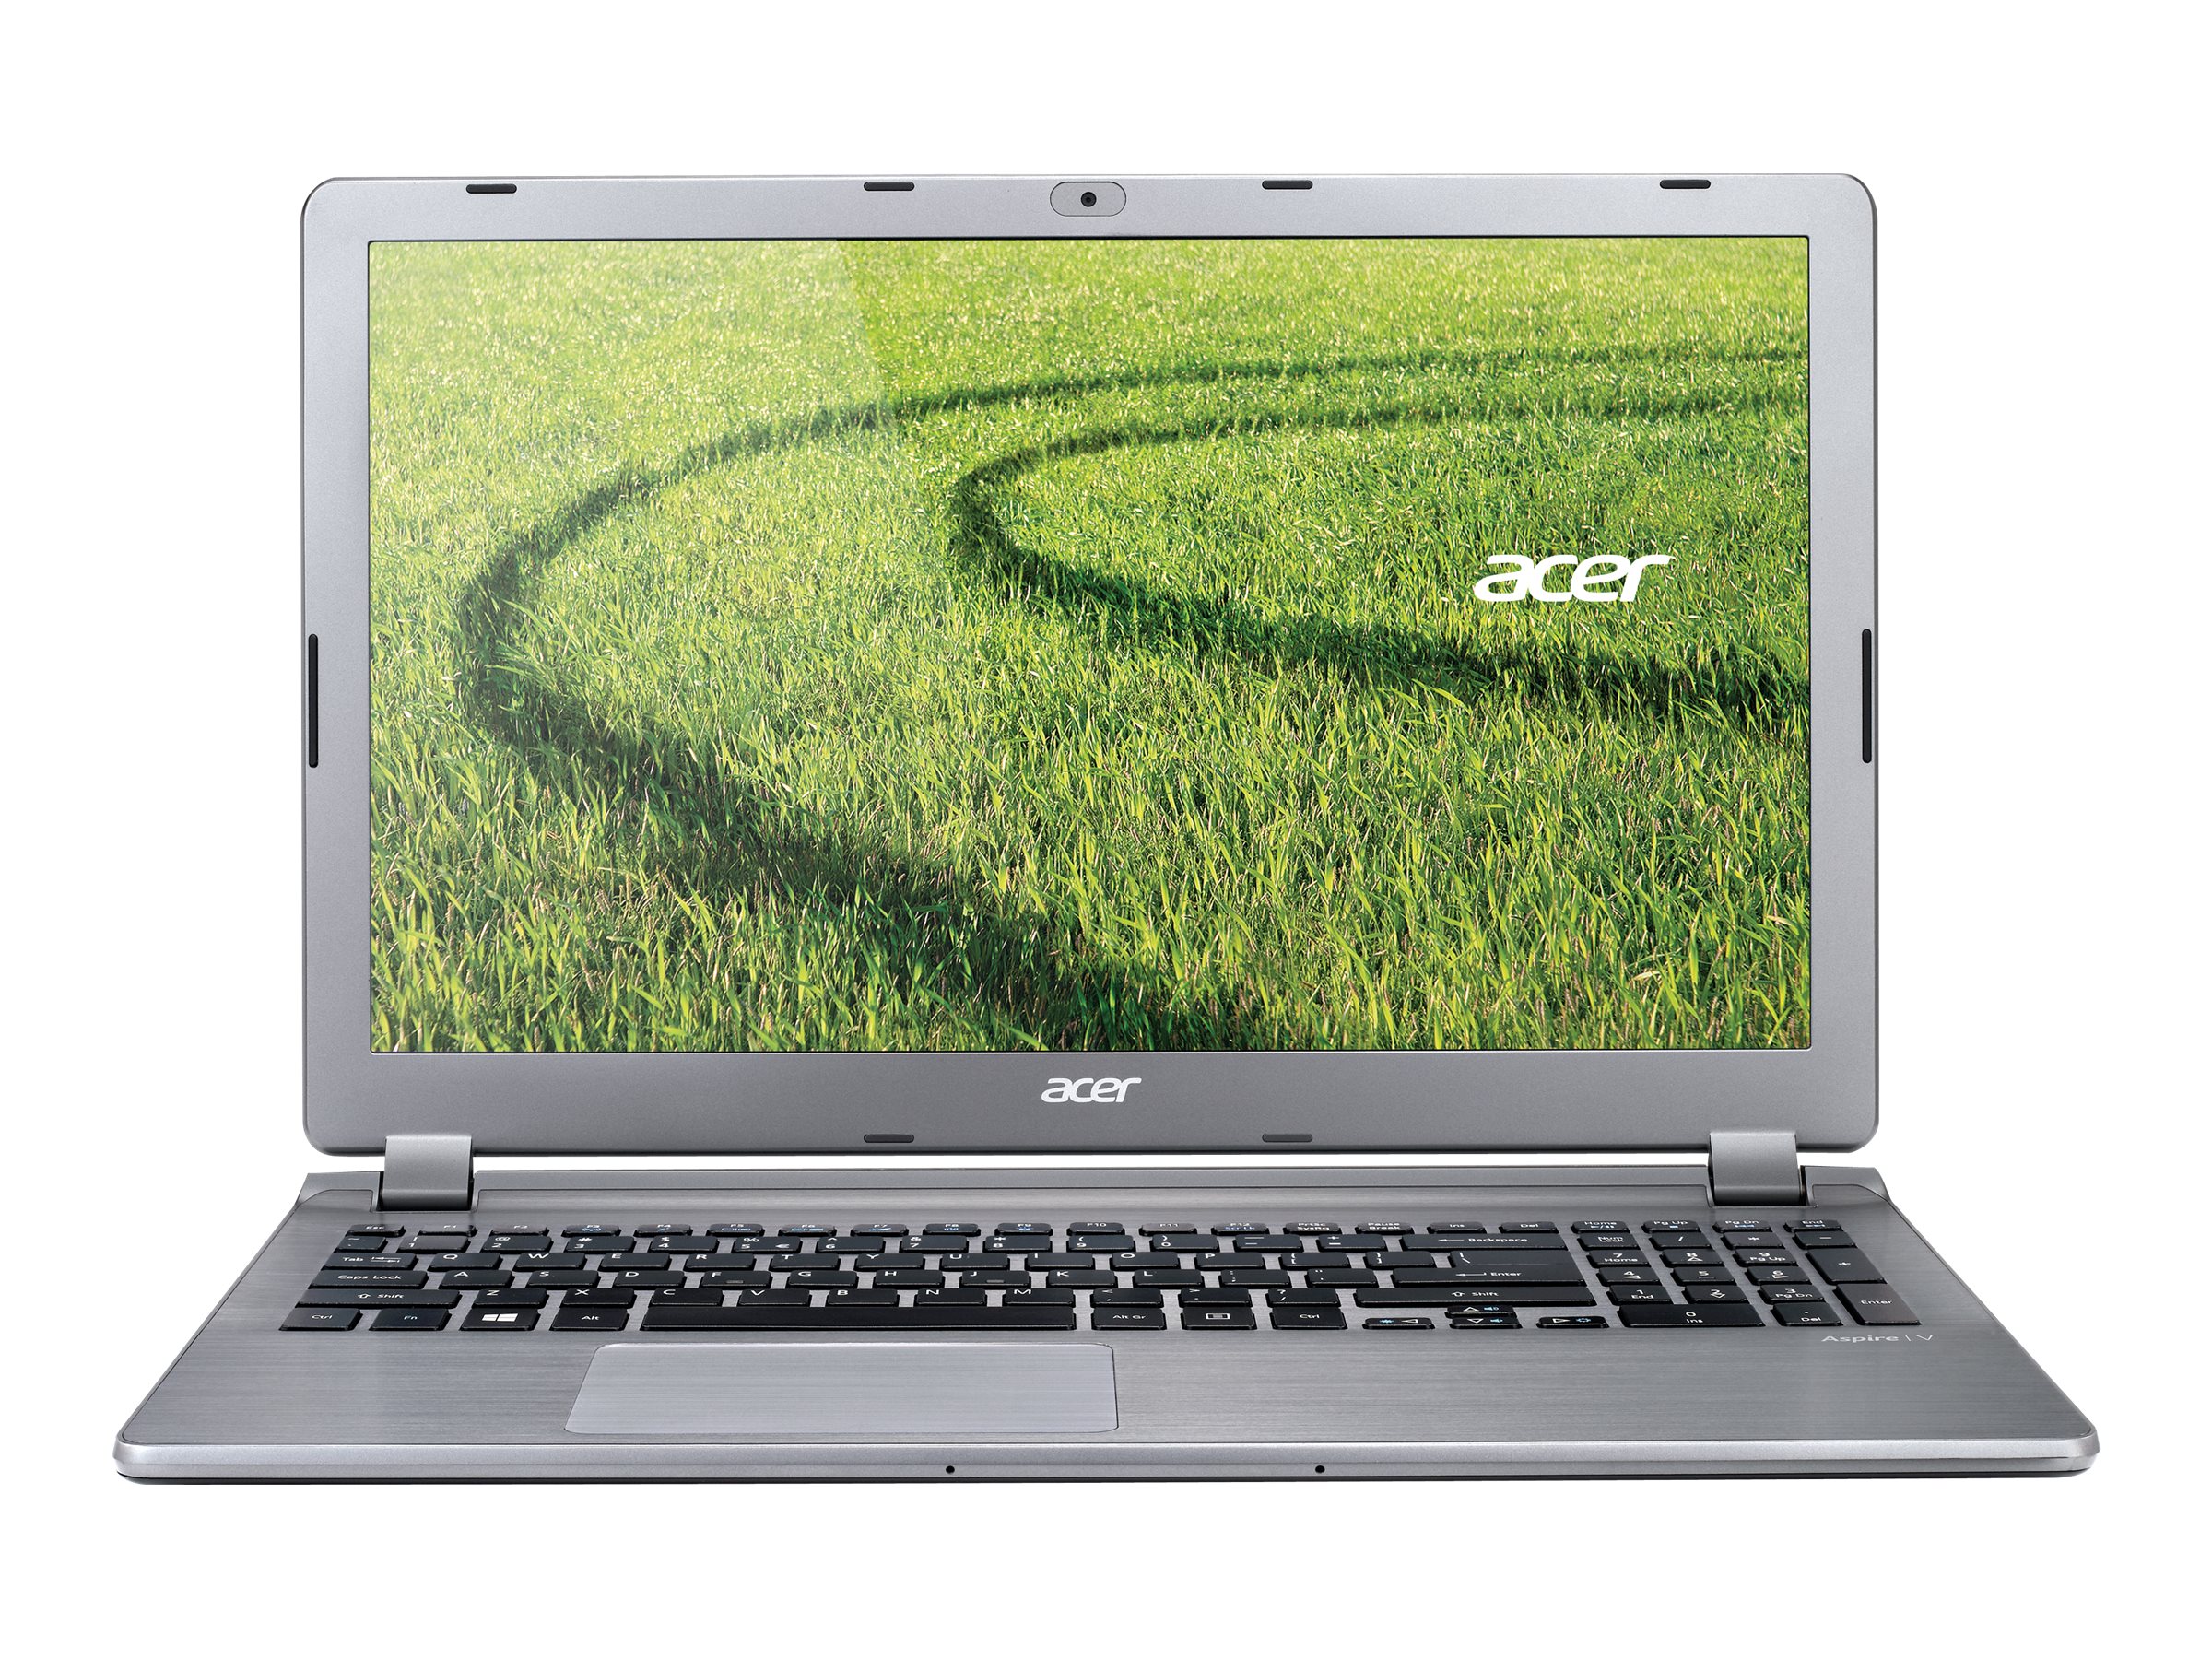 Acer Aspire V5 (561)